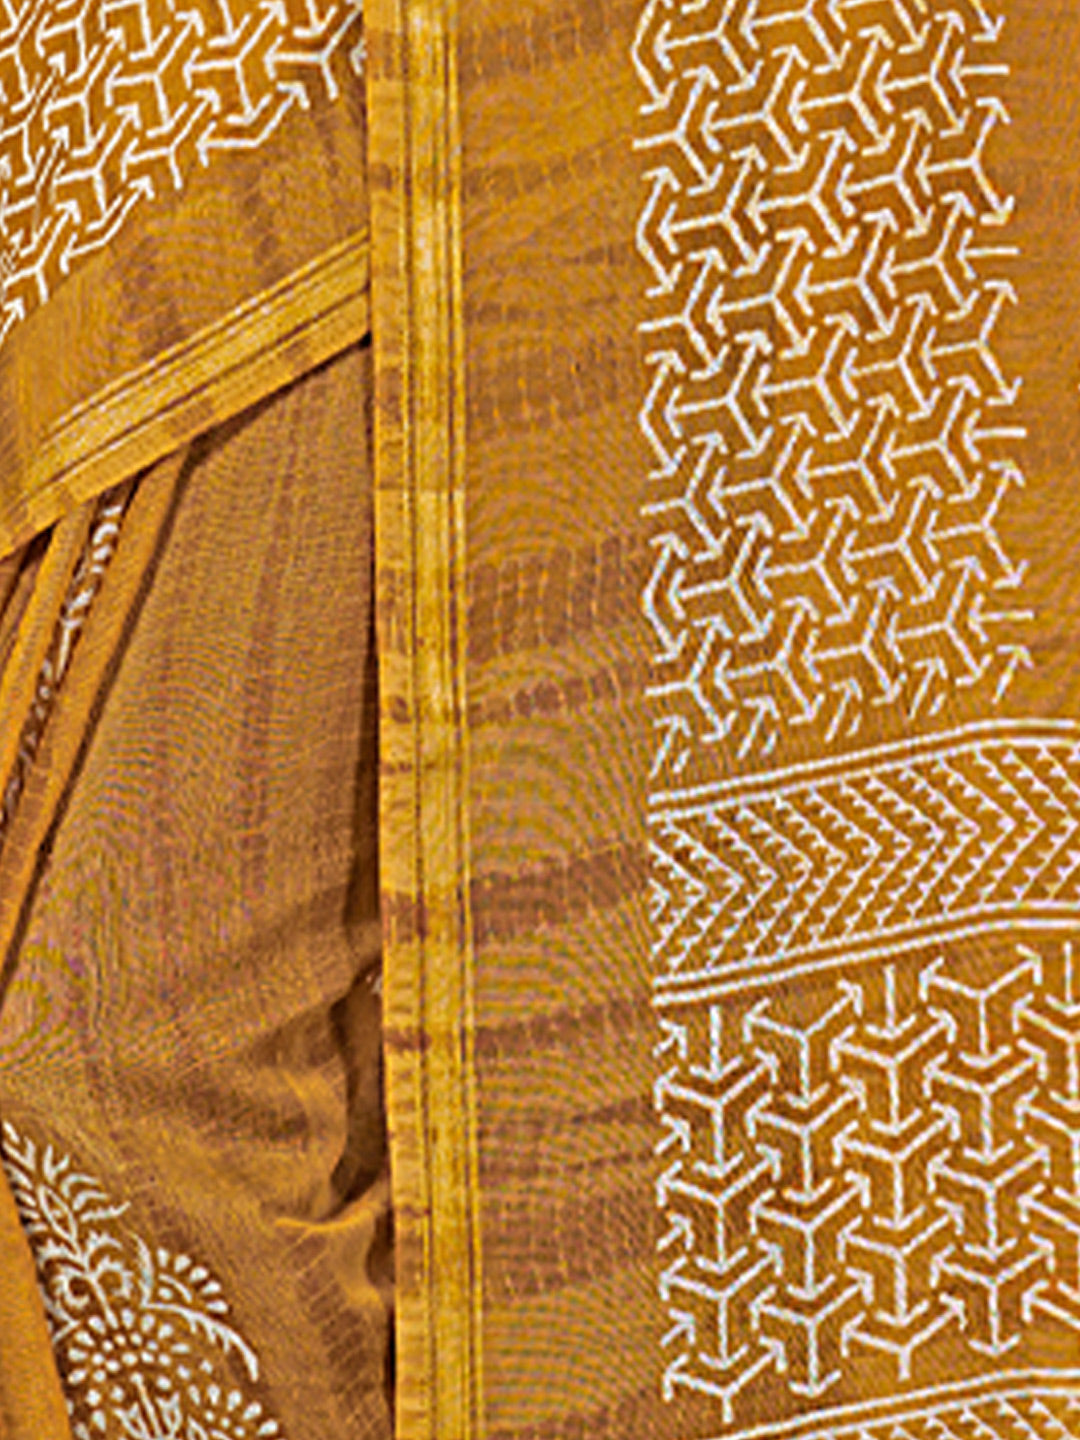 Women's Mustard Cotton Printed Traditional Saree - Sangam Prints